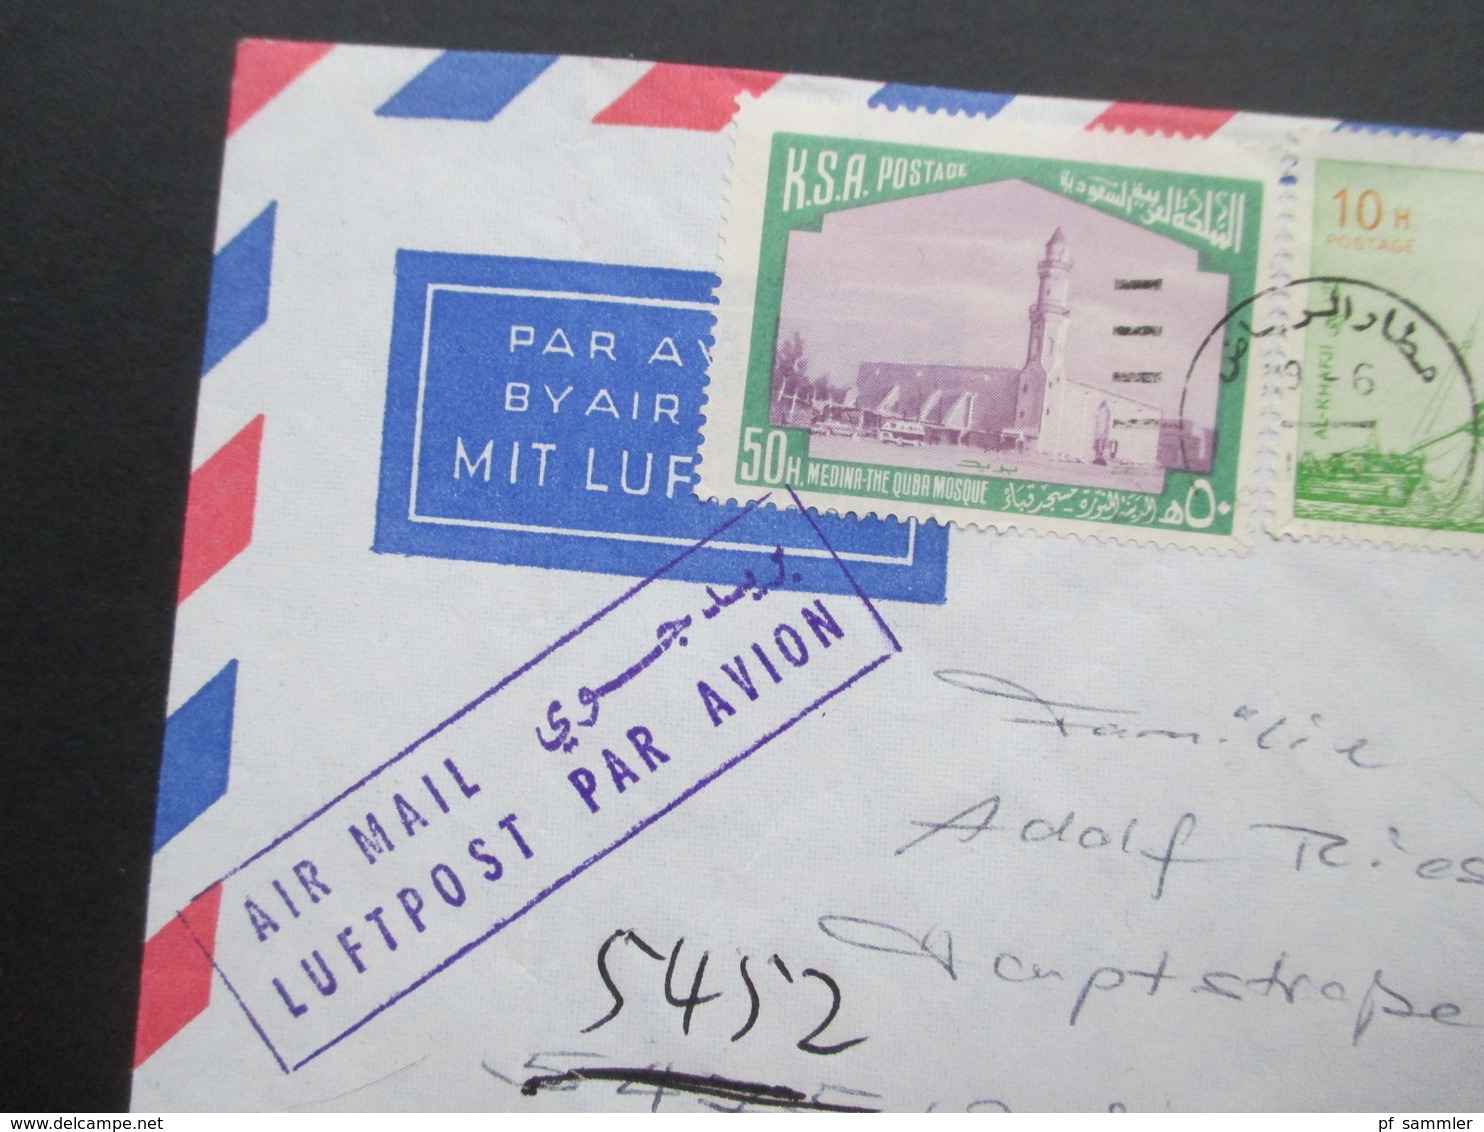 Saudi-Arabien 1977 KSA Postage MiF Air Mail / Luftpost Nach Weissenthurm 25th ANNIVERSARY OF THE RIAD - Arabie Saoudite